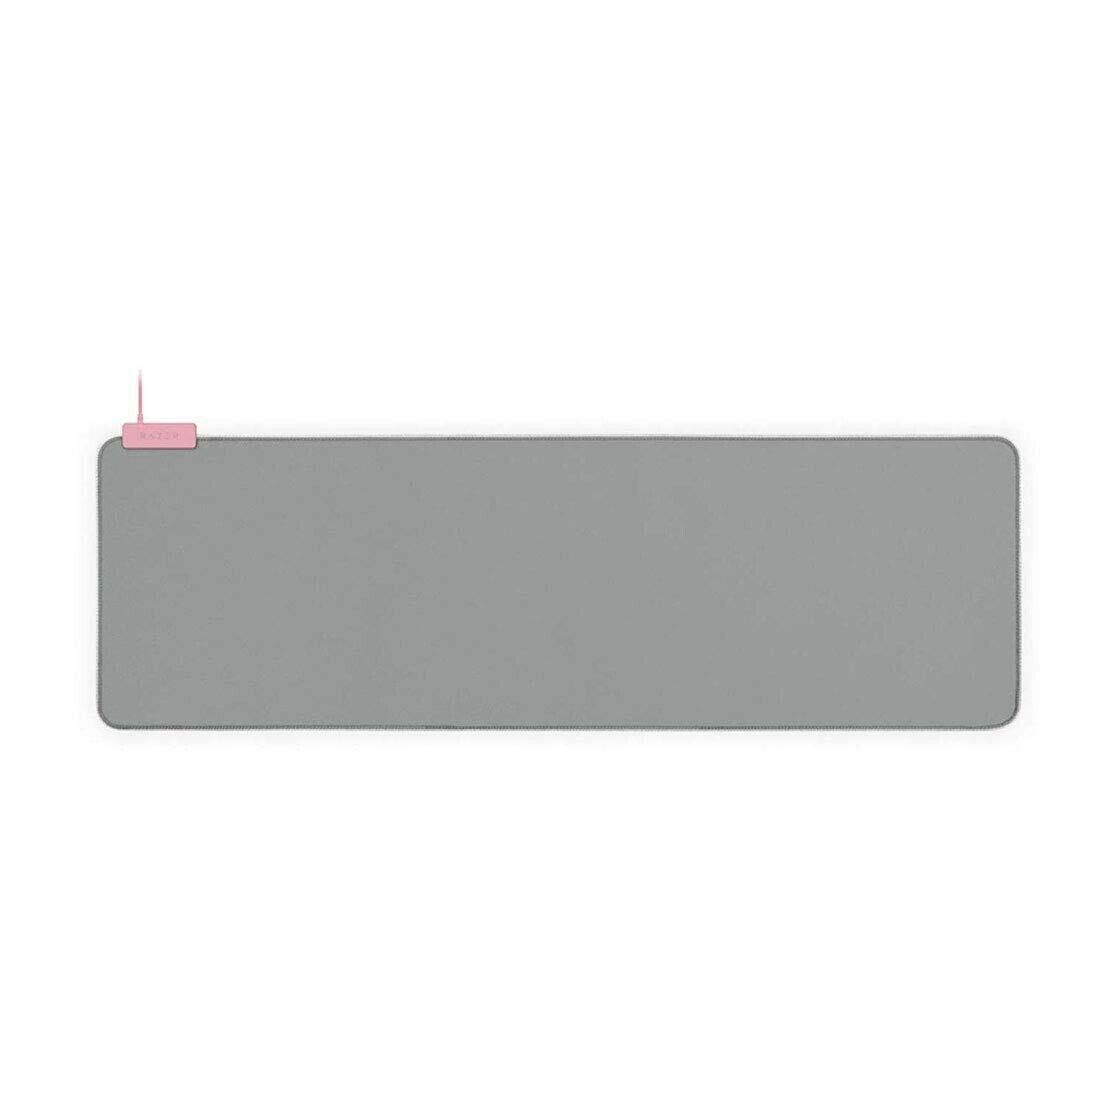 Razer - Goliathus Extended Chroma Gaming Mouse Pad w/RGB Lighting - Quartz Pink